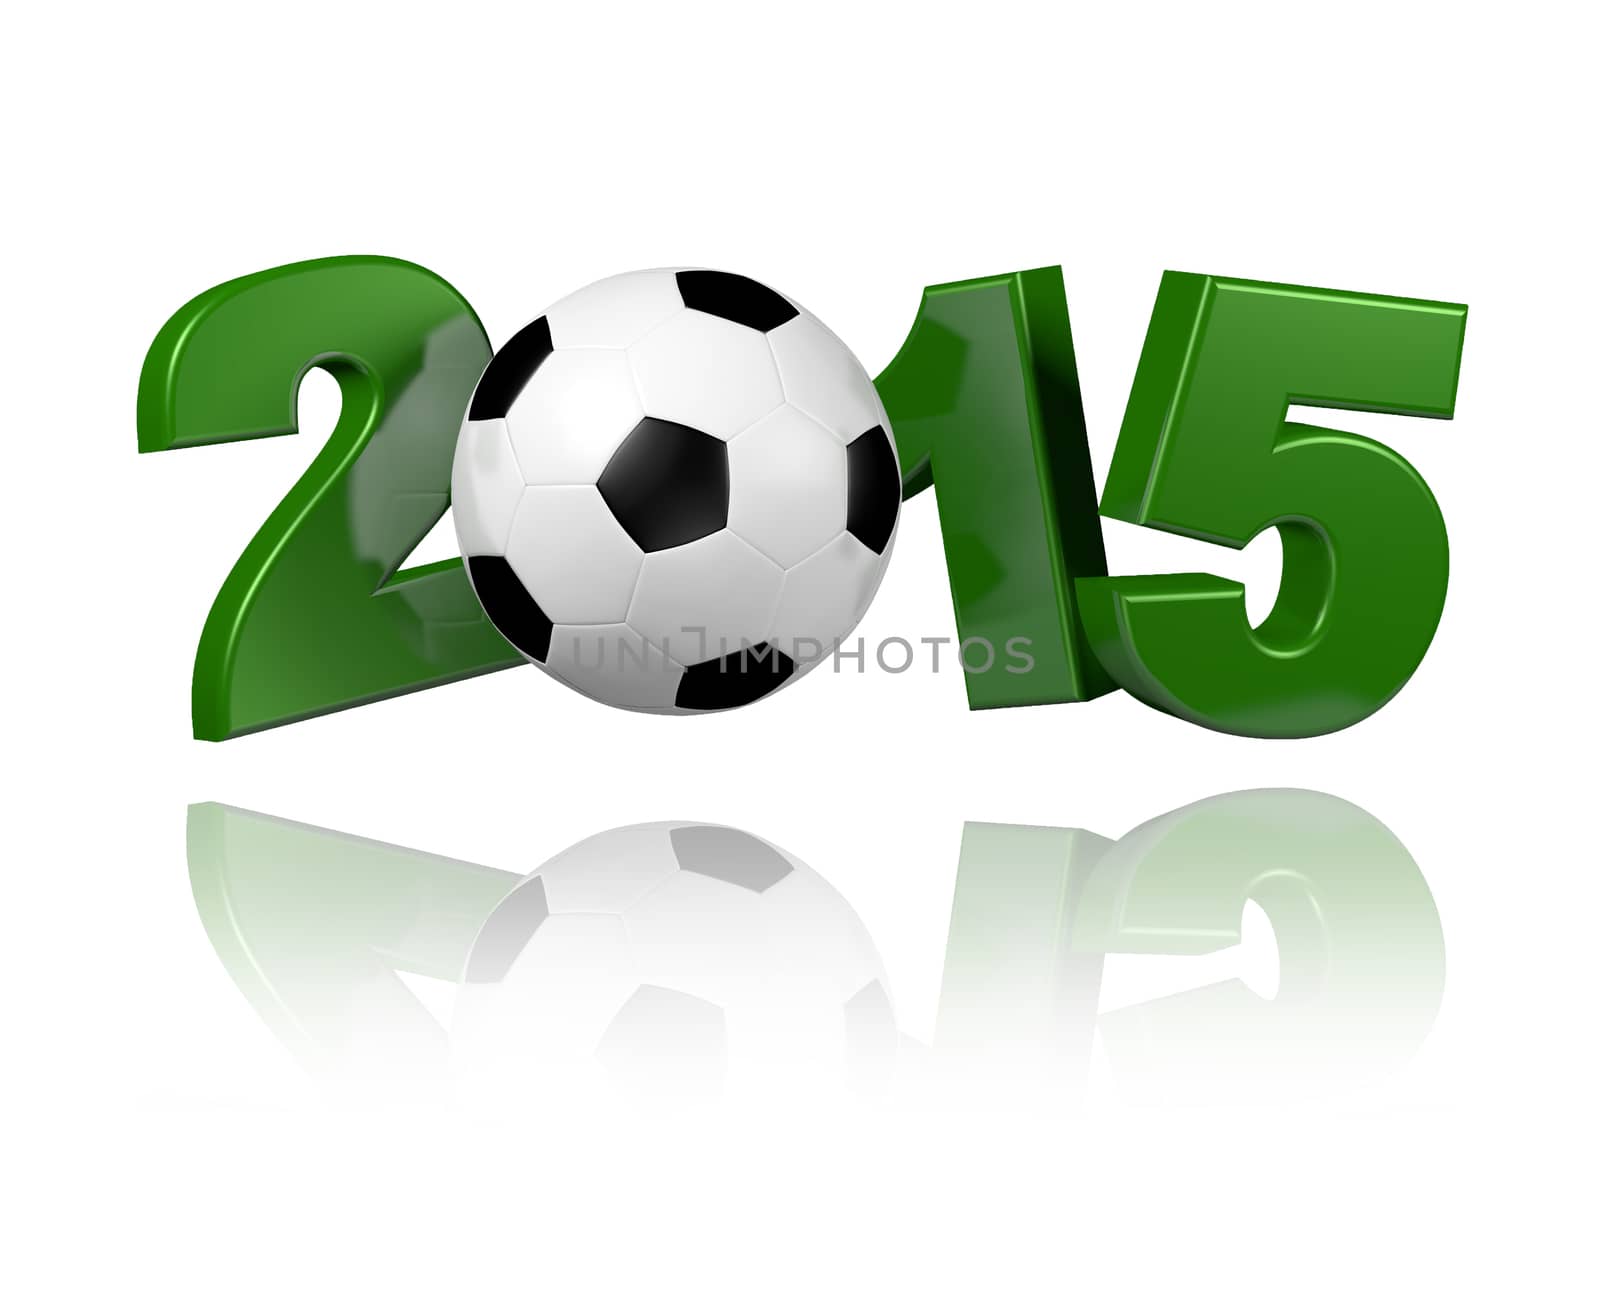 Football 2015 design by shkyo30